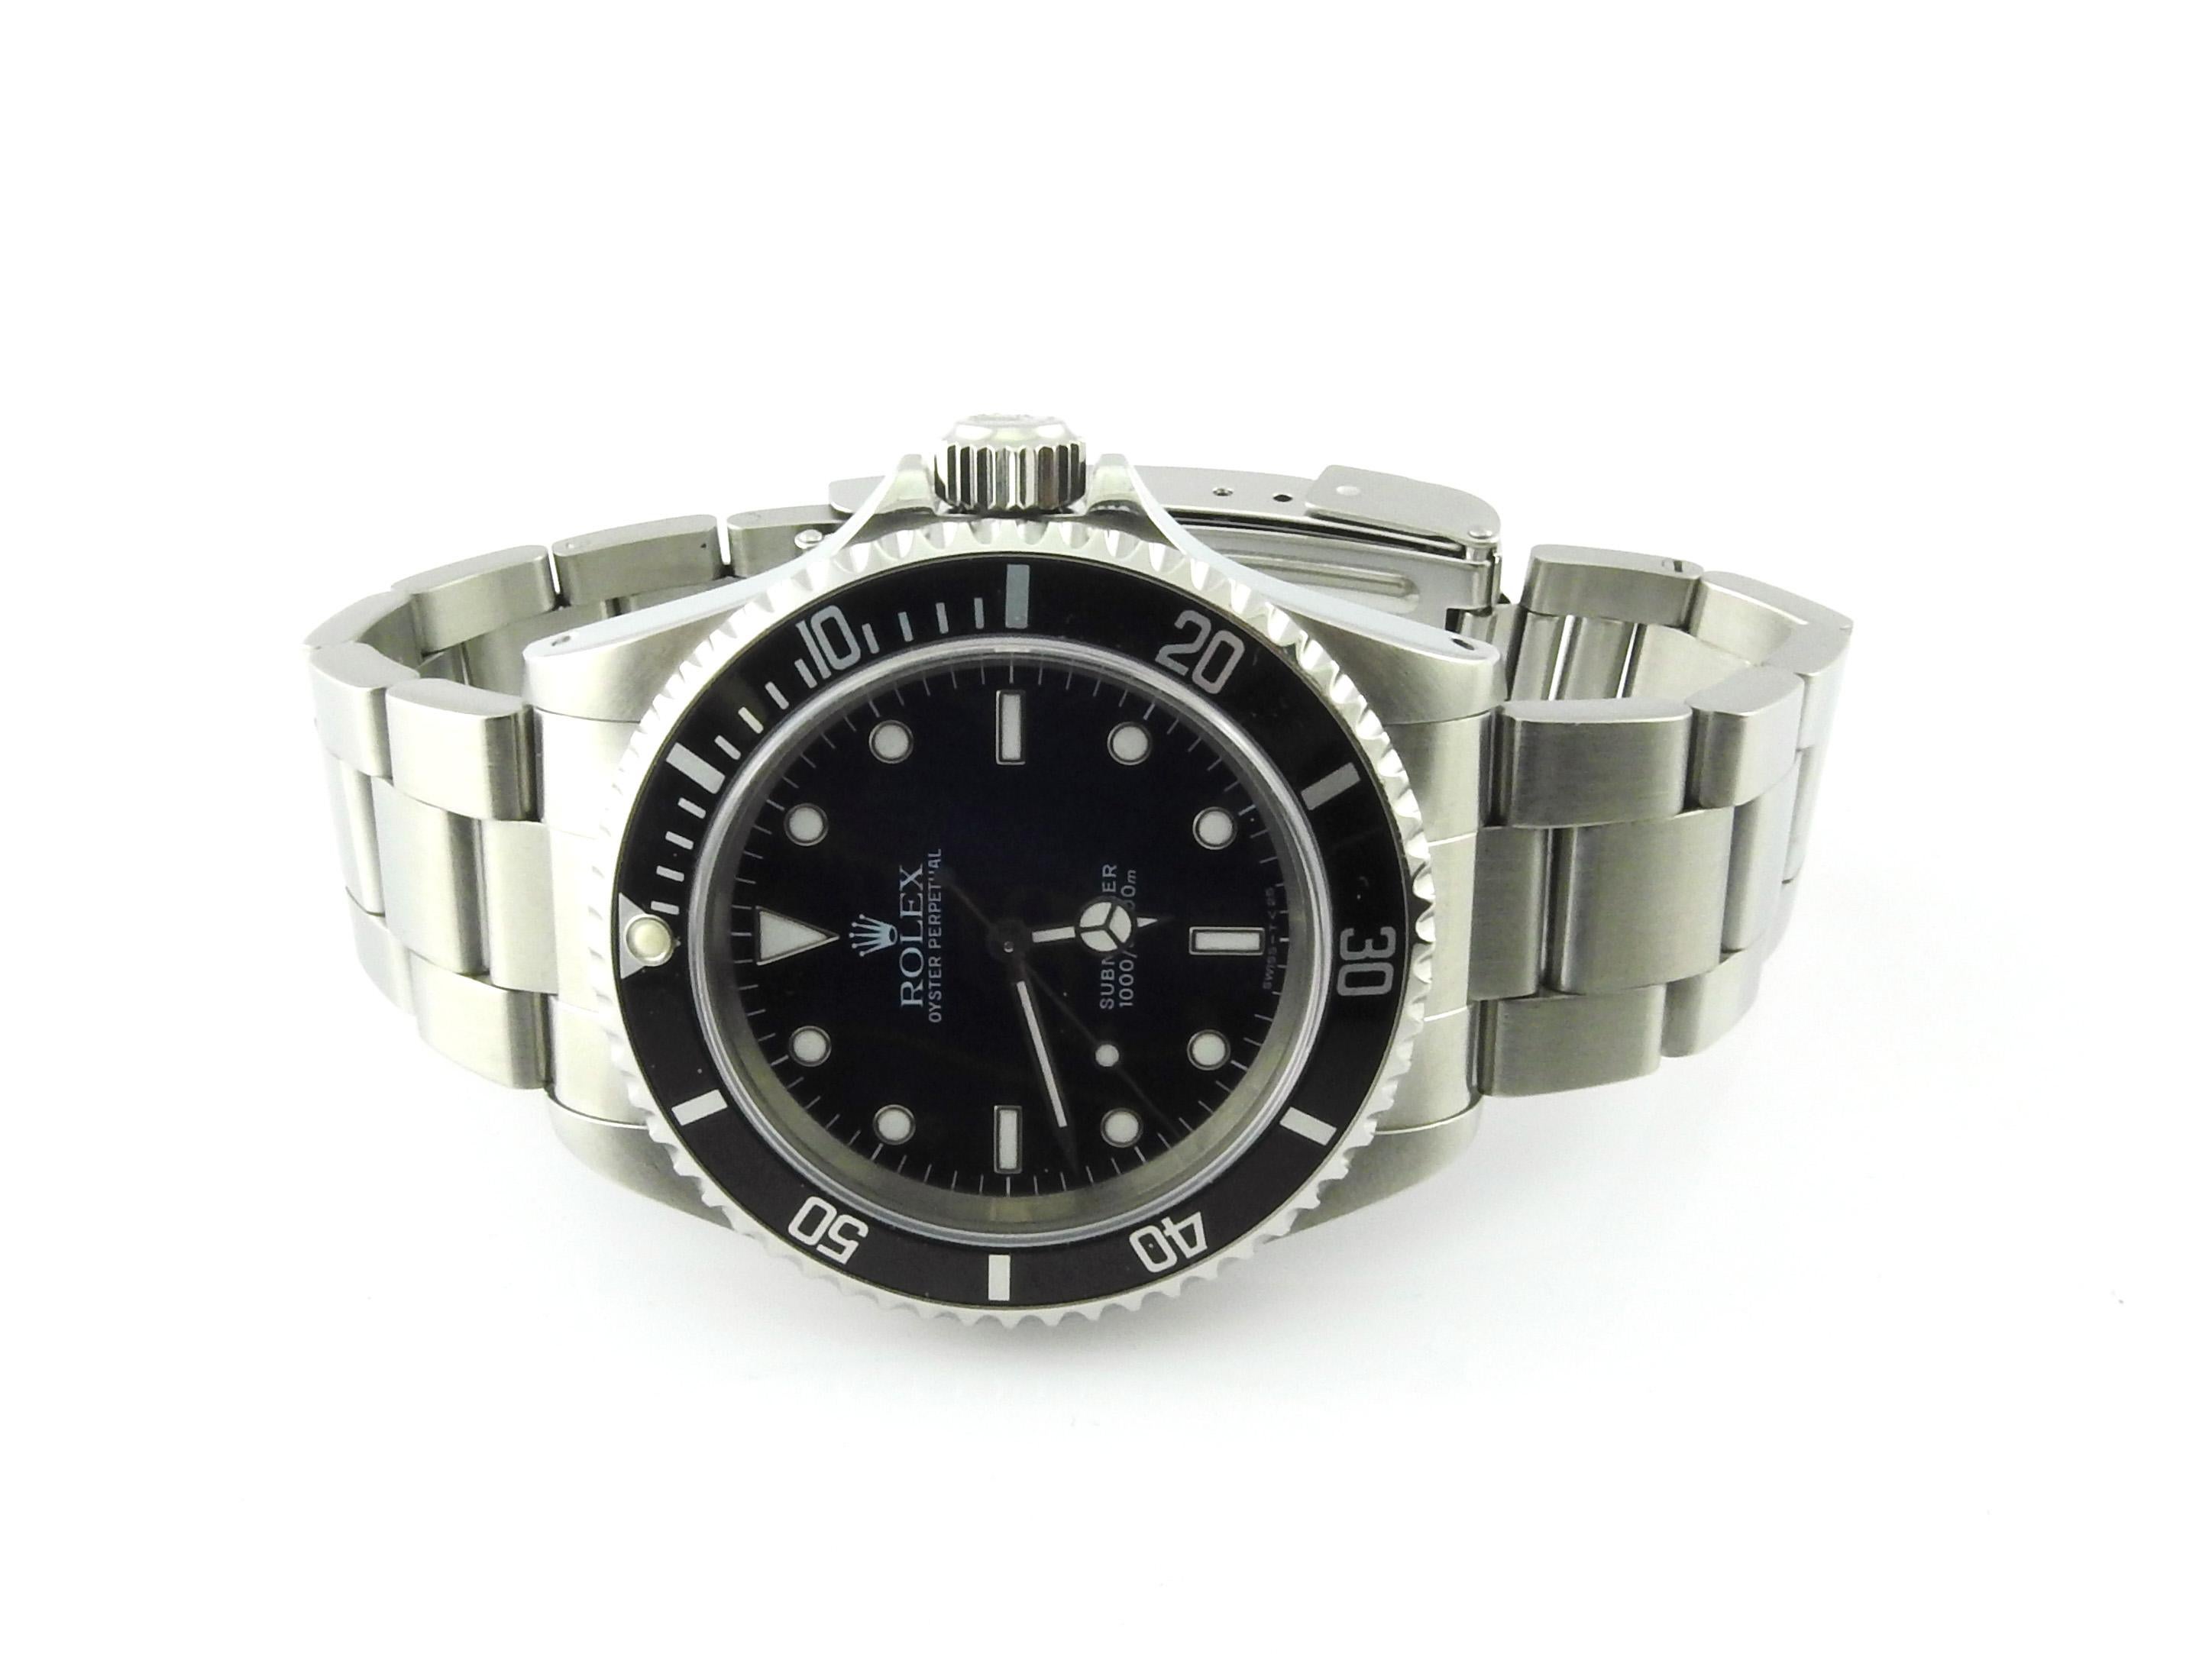 1997 Rolex Submariner Watch

Model: 14060
Serial: U353237

40 mm case

Black Dial , Black Bezel 

No Date

Stainless Steel Oyster Bracelet with flip lock

7.5